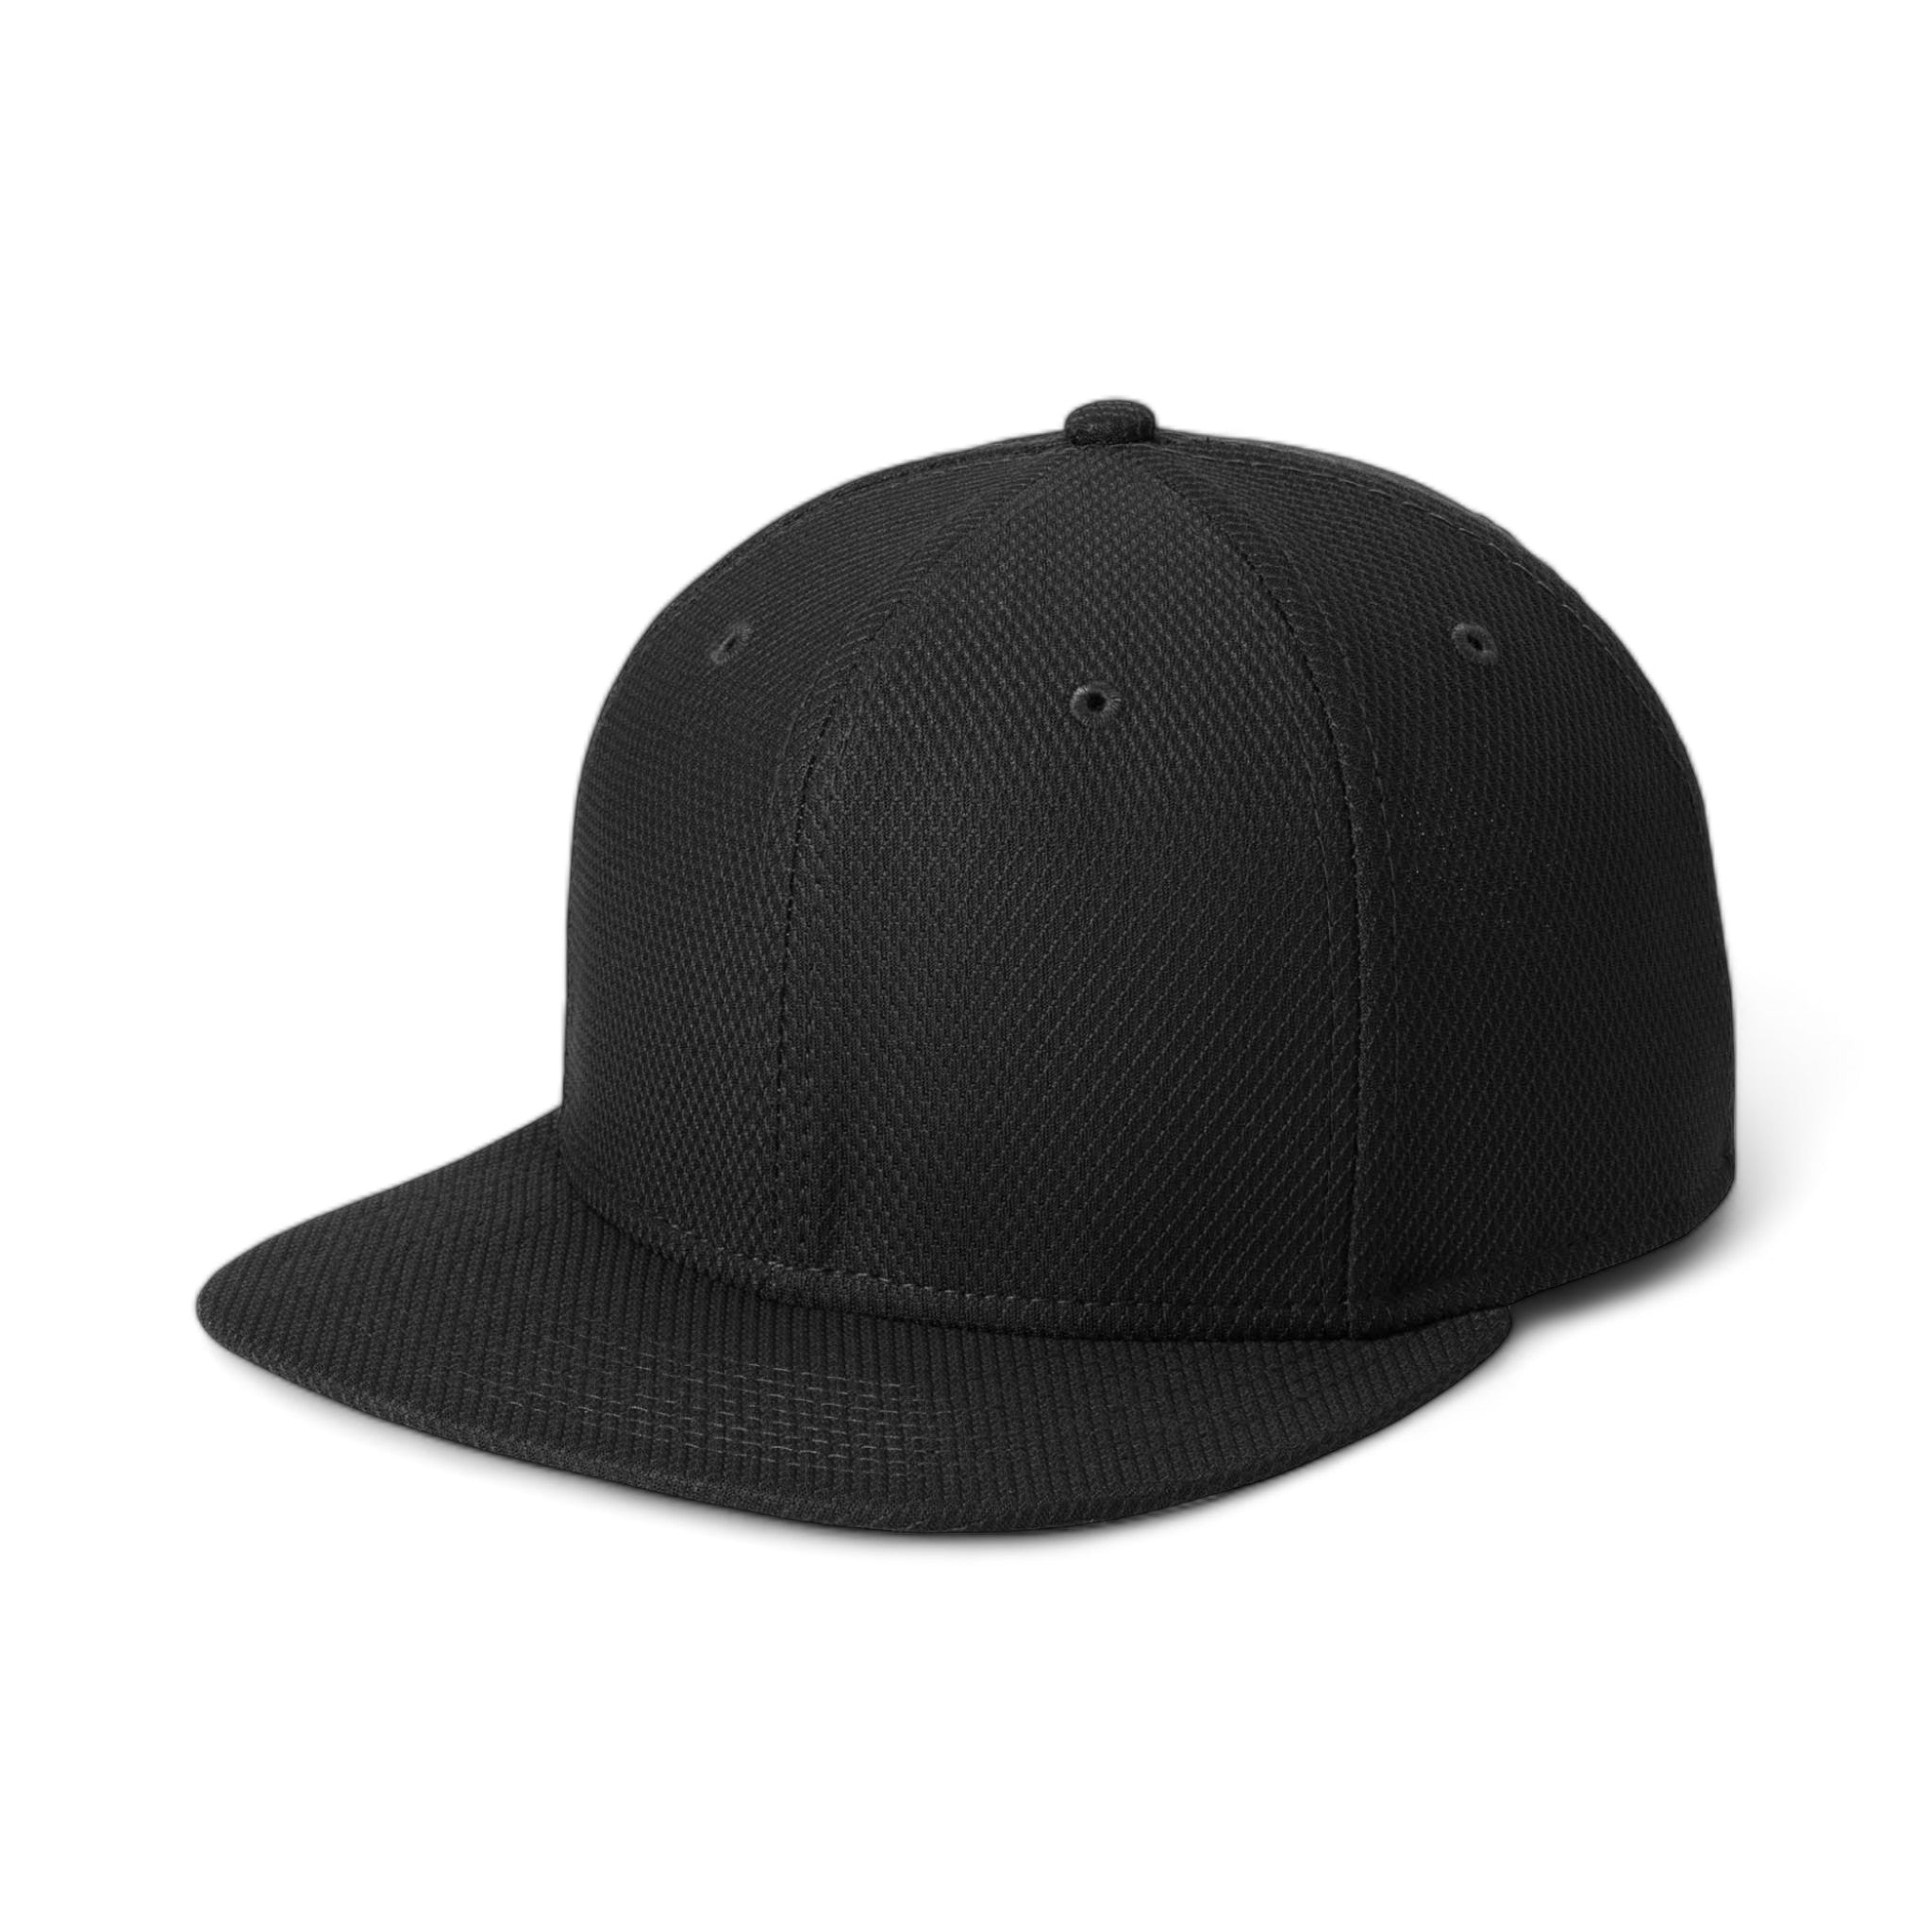 Side view of New Era NE404 custom hat in black